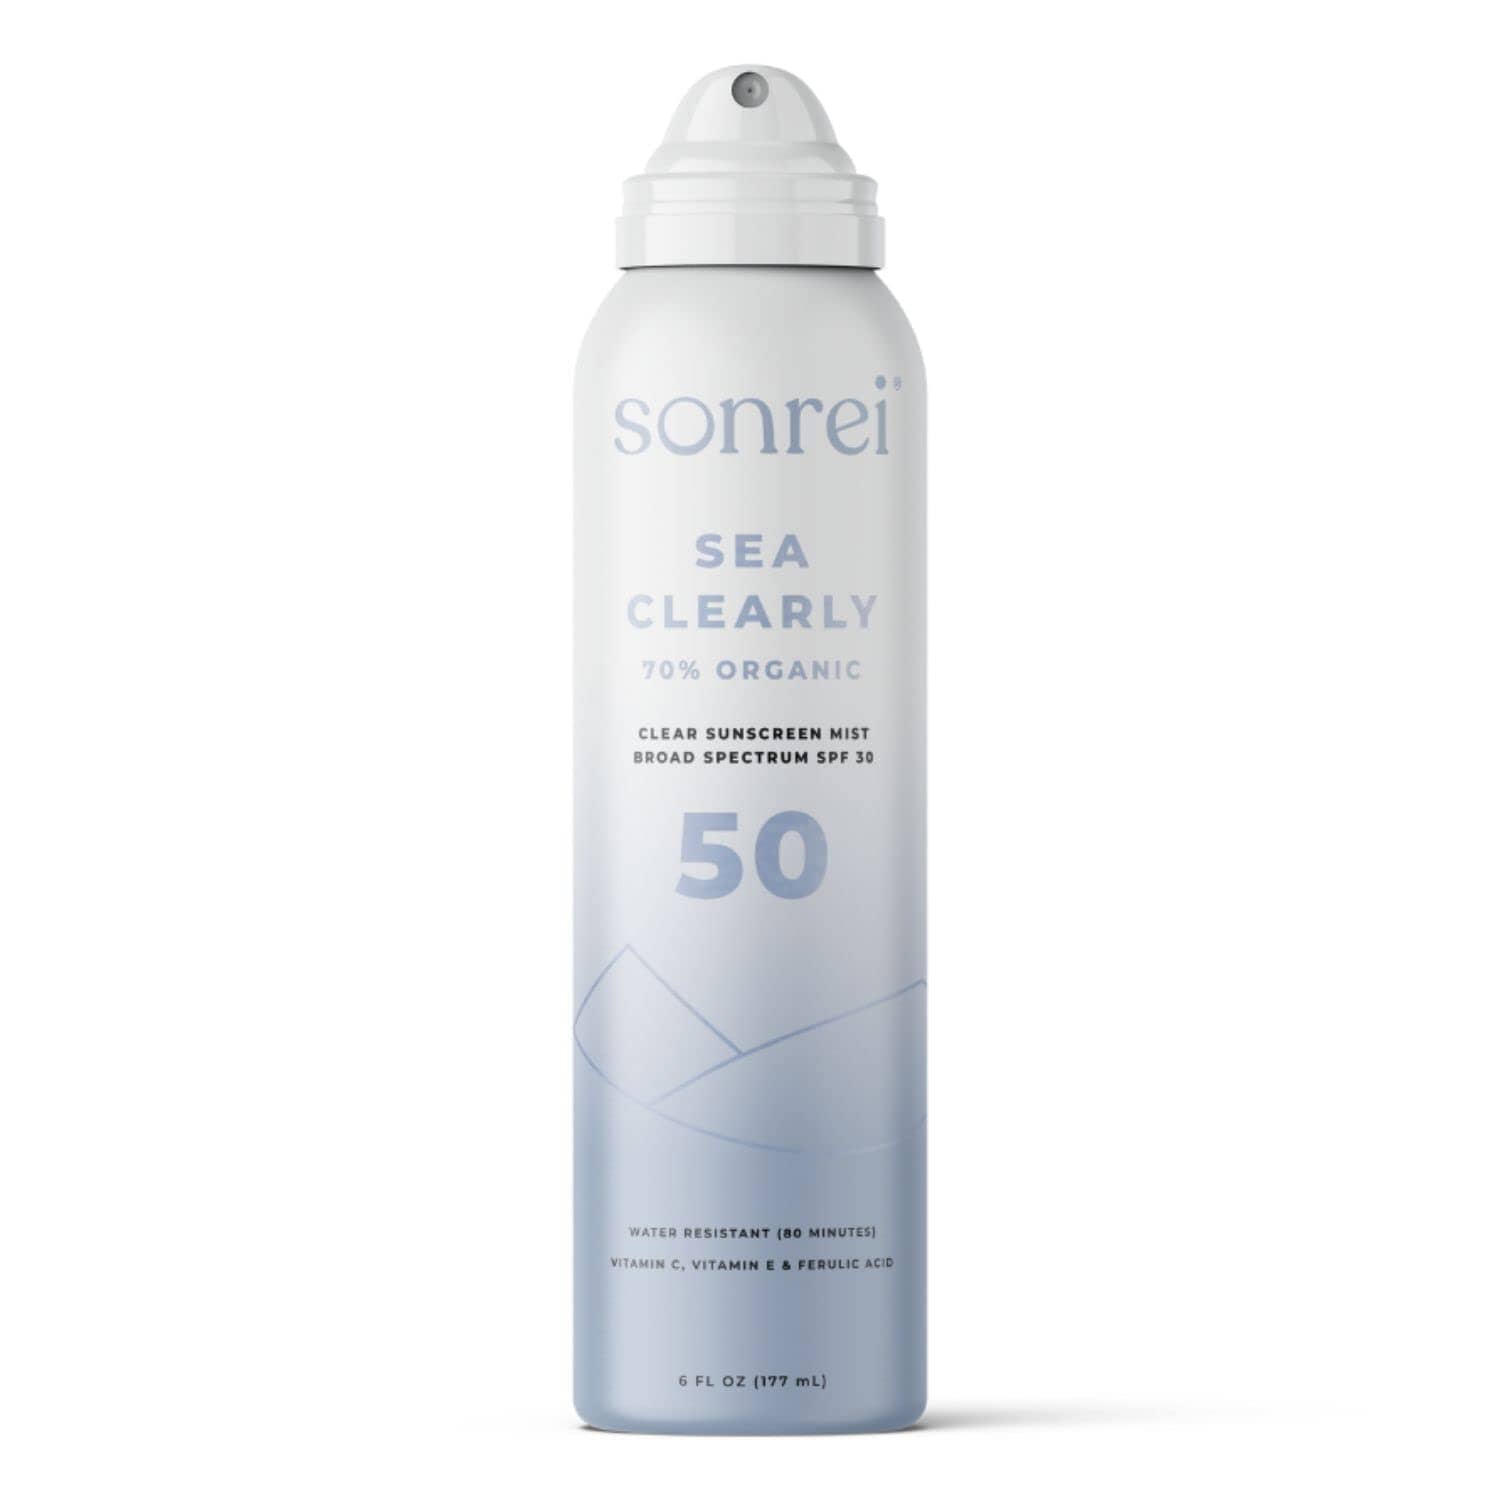 Sonrei Sea Clearly Organic SPF 50 Clear Sunscreen Mist Sunscreen Sonrei 6 fl. oz. Shop at Exclusive Beauty Club